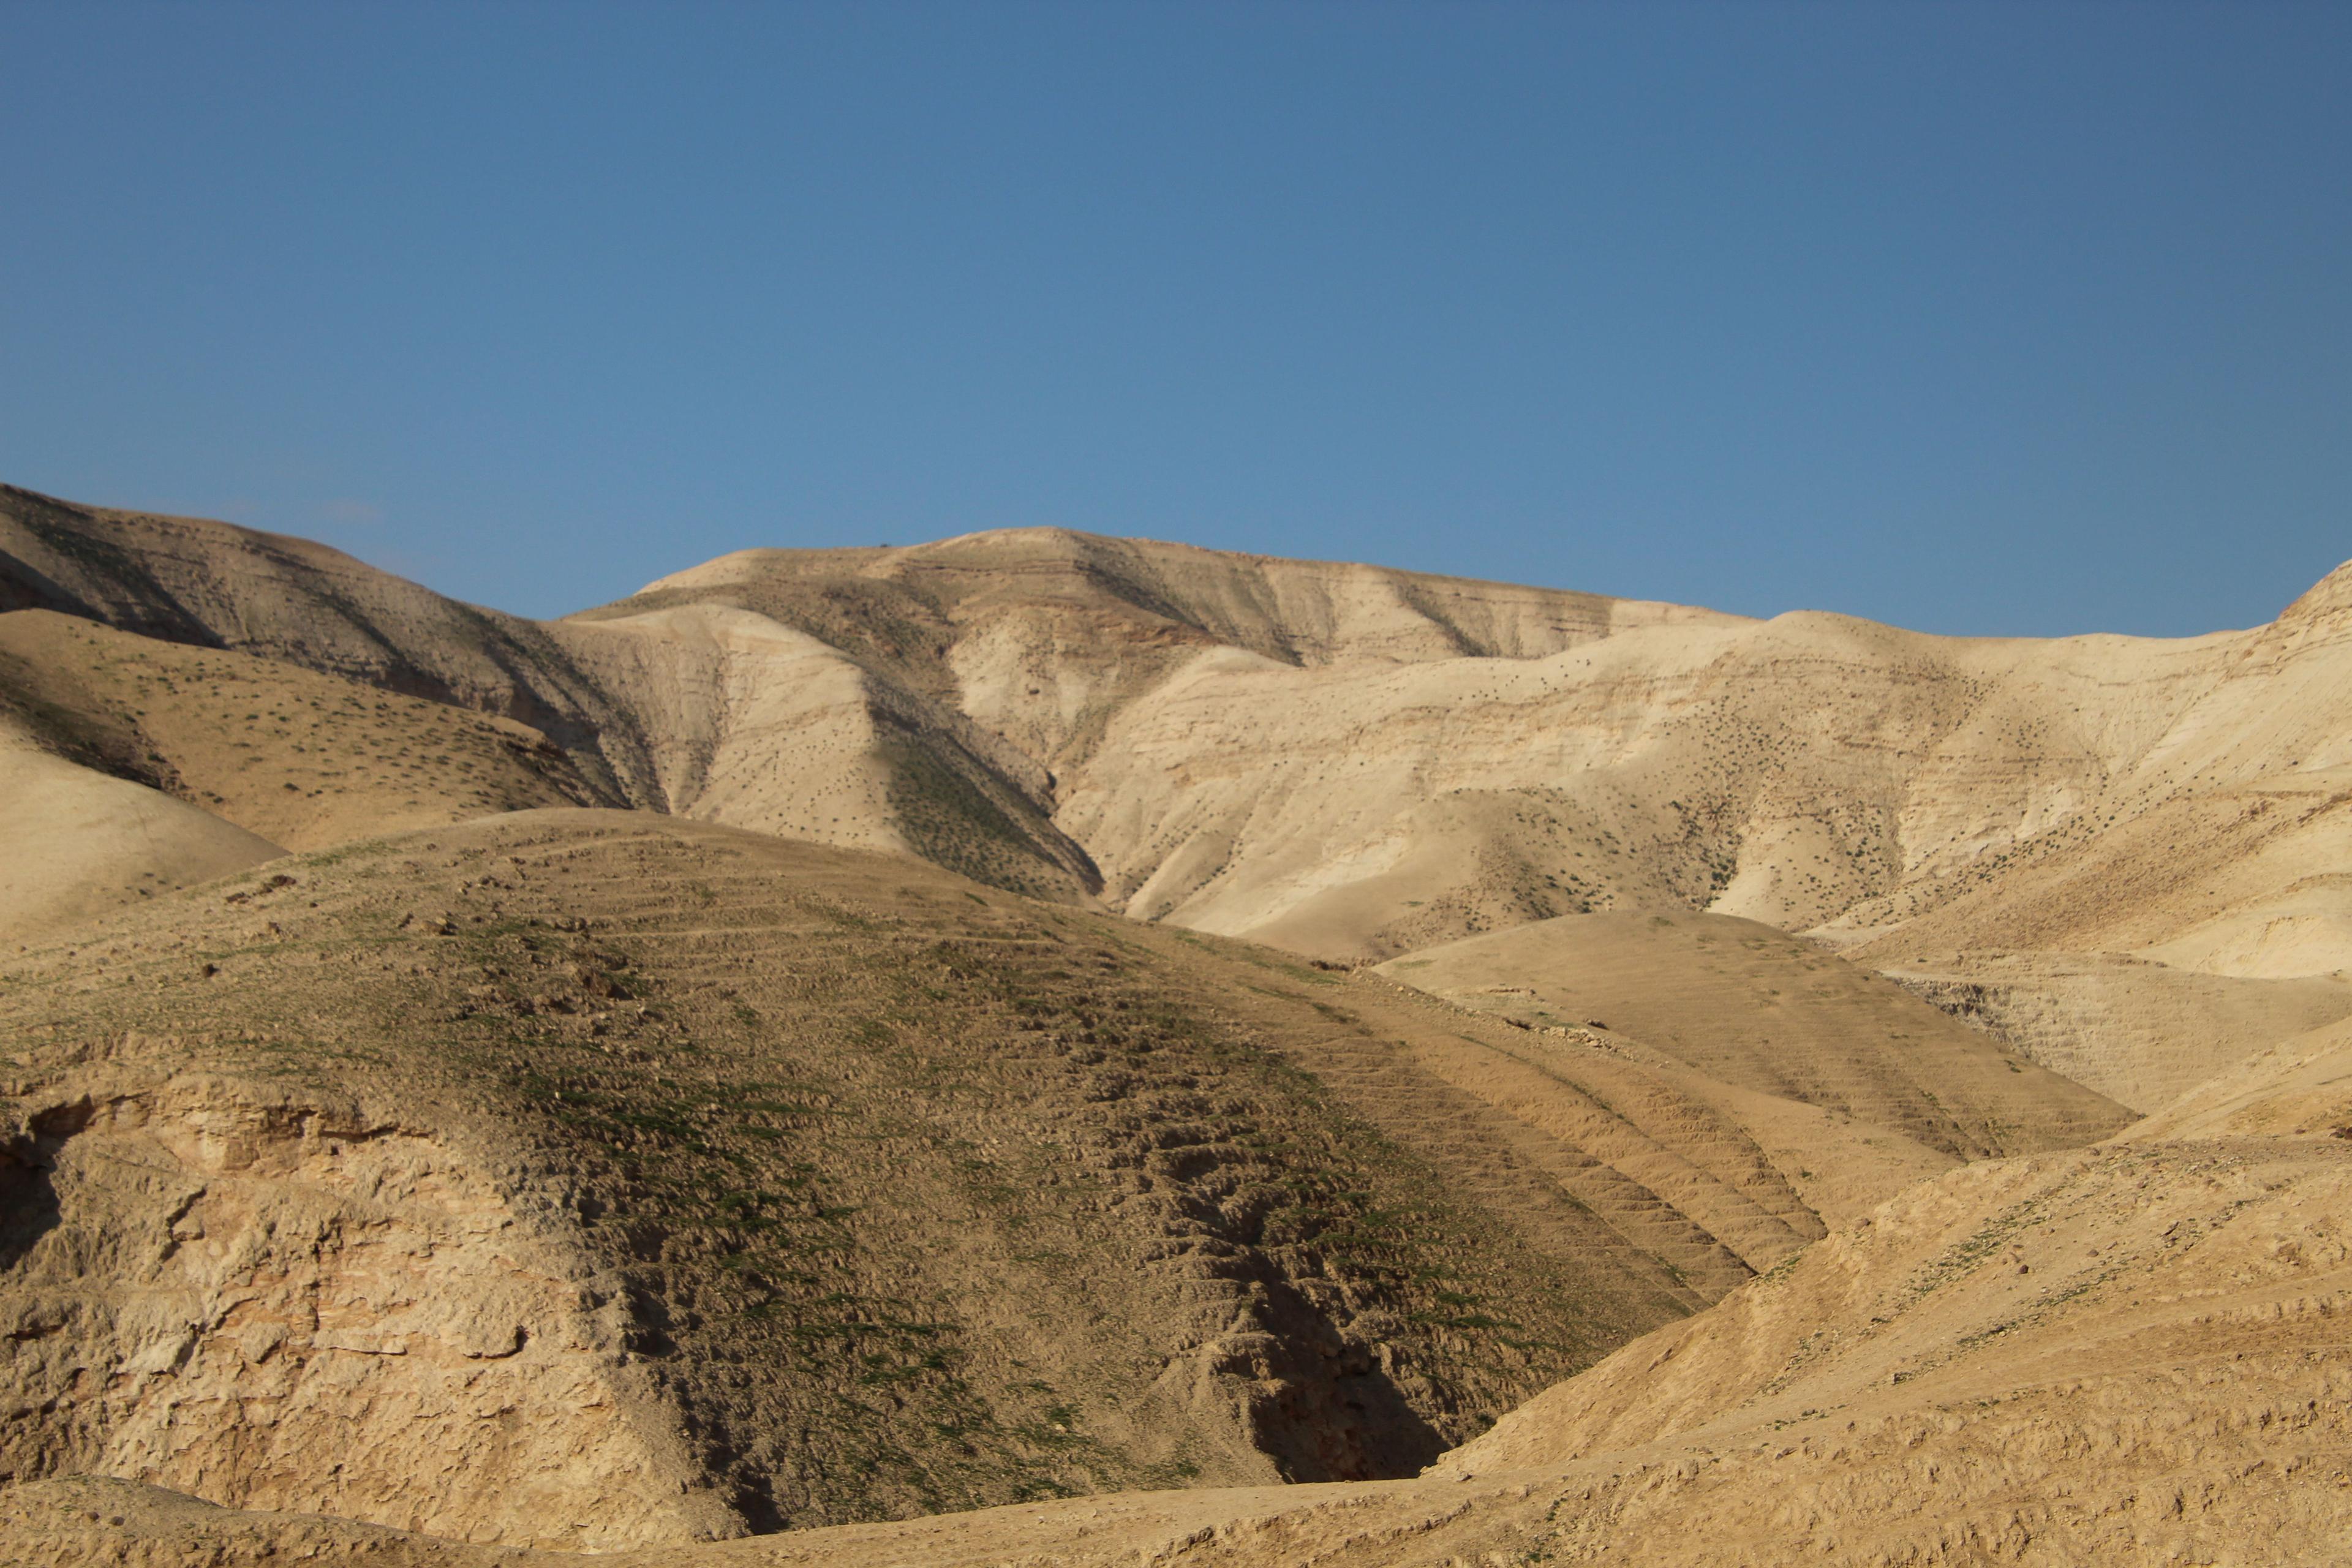 Qumran: The Place Where John the Baptist Got His Inspiration